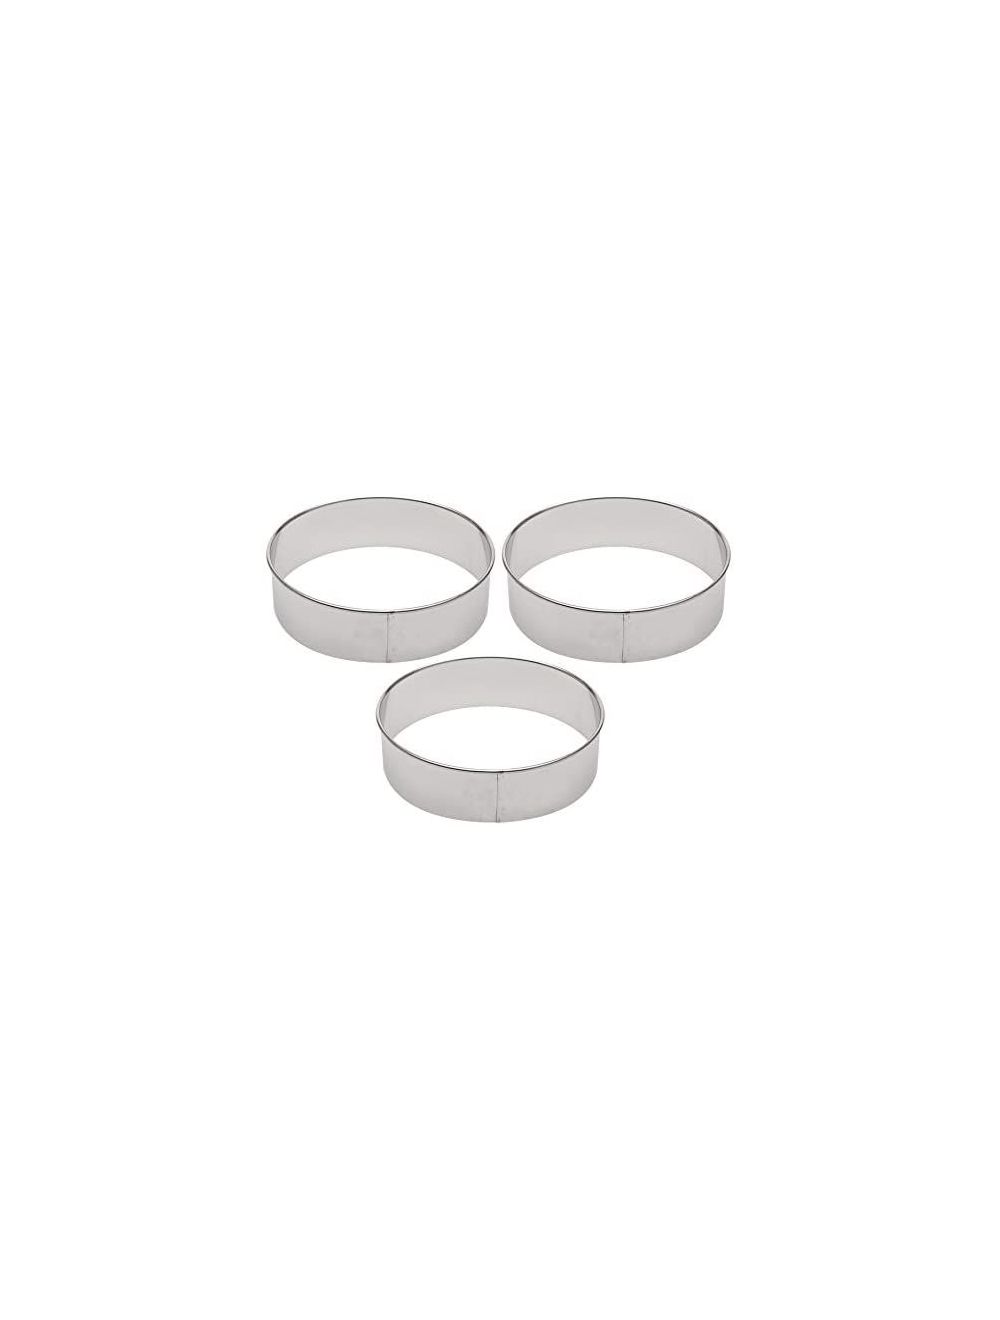 Raj Ring Cutter Set, Silver, RS0002, 3 Pcs